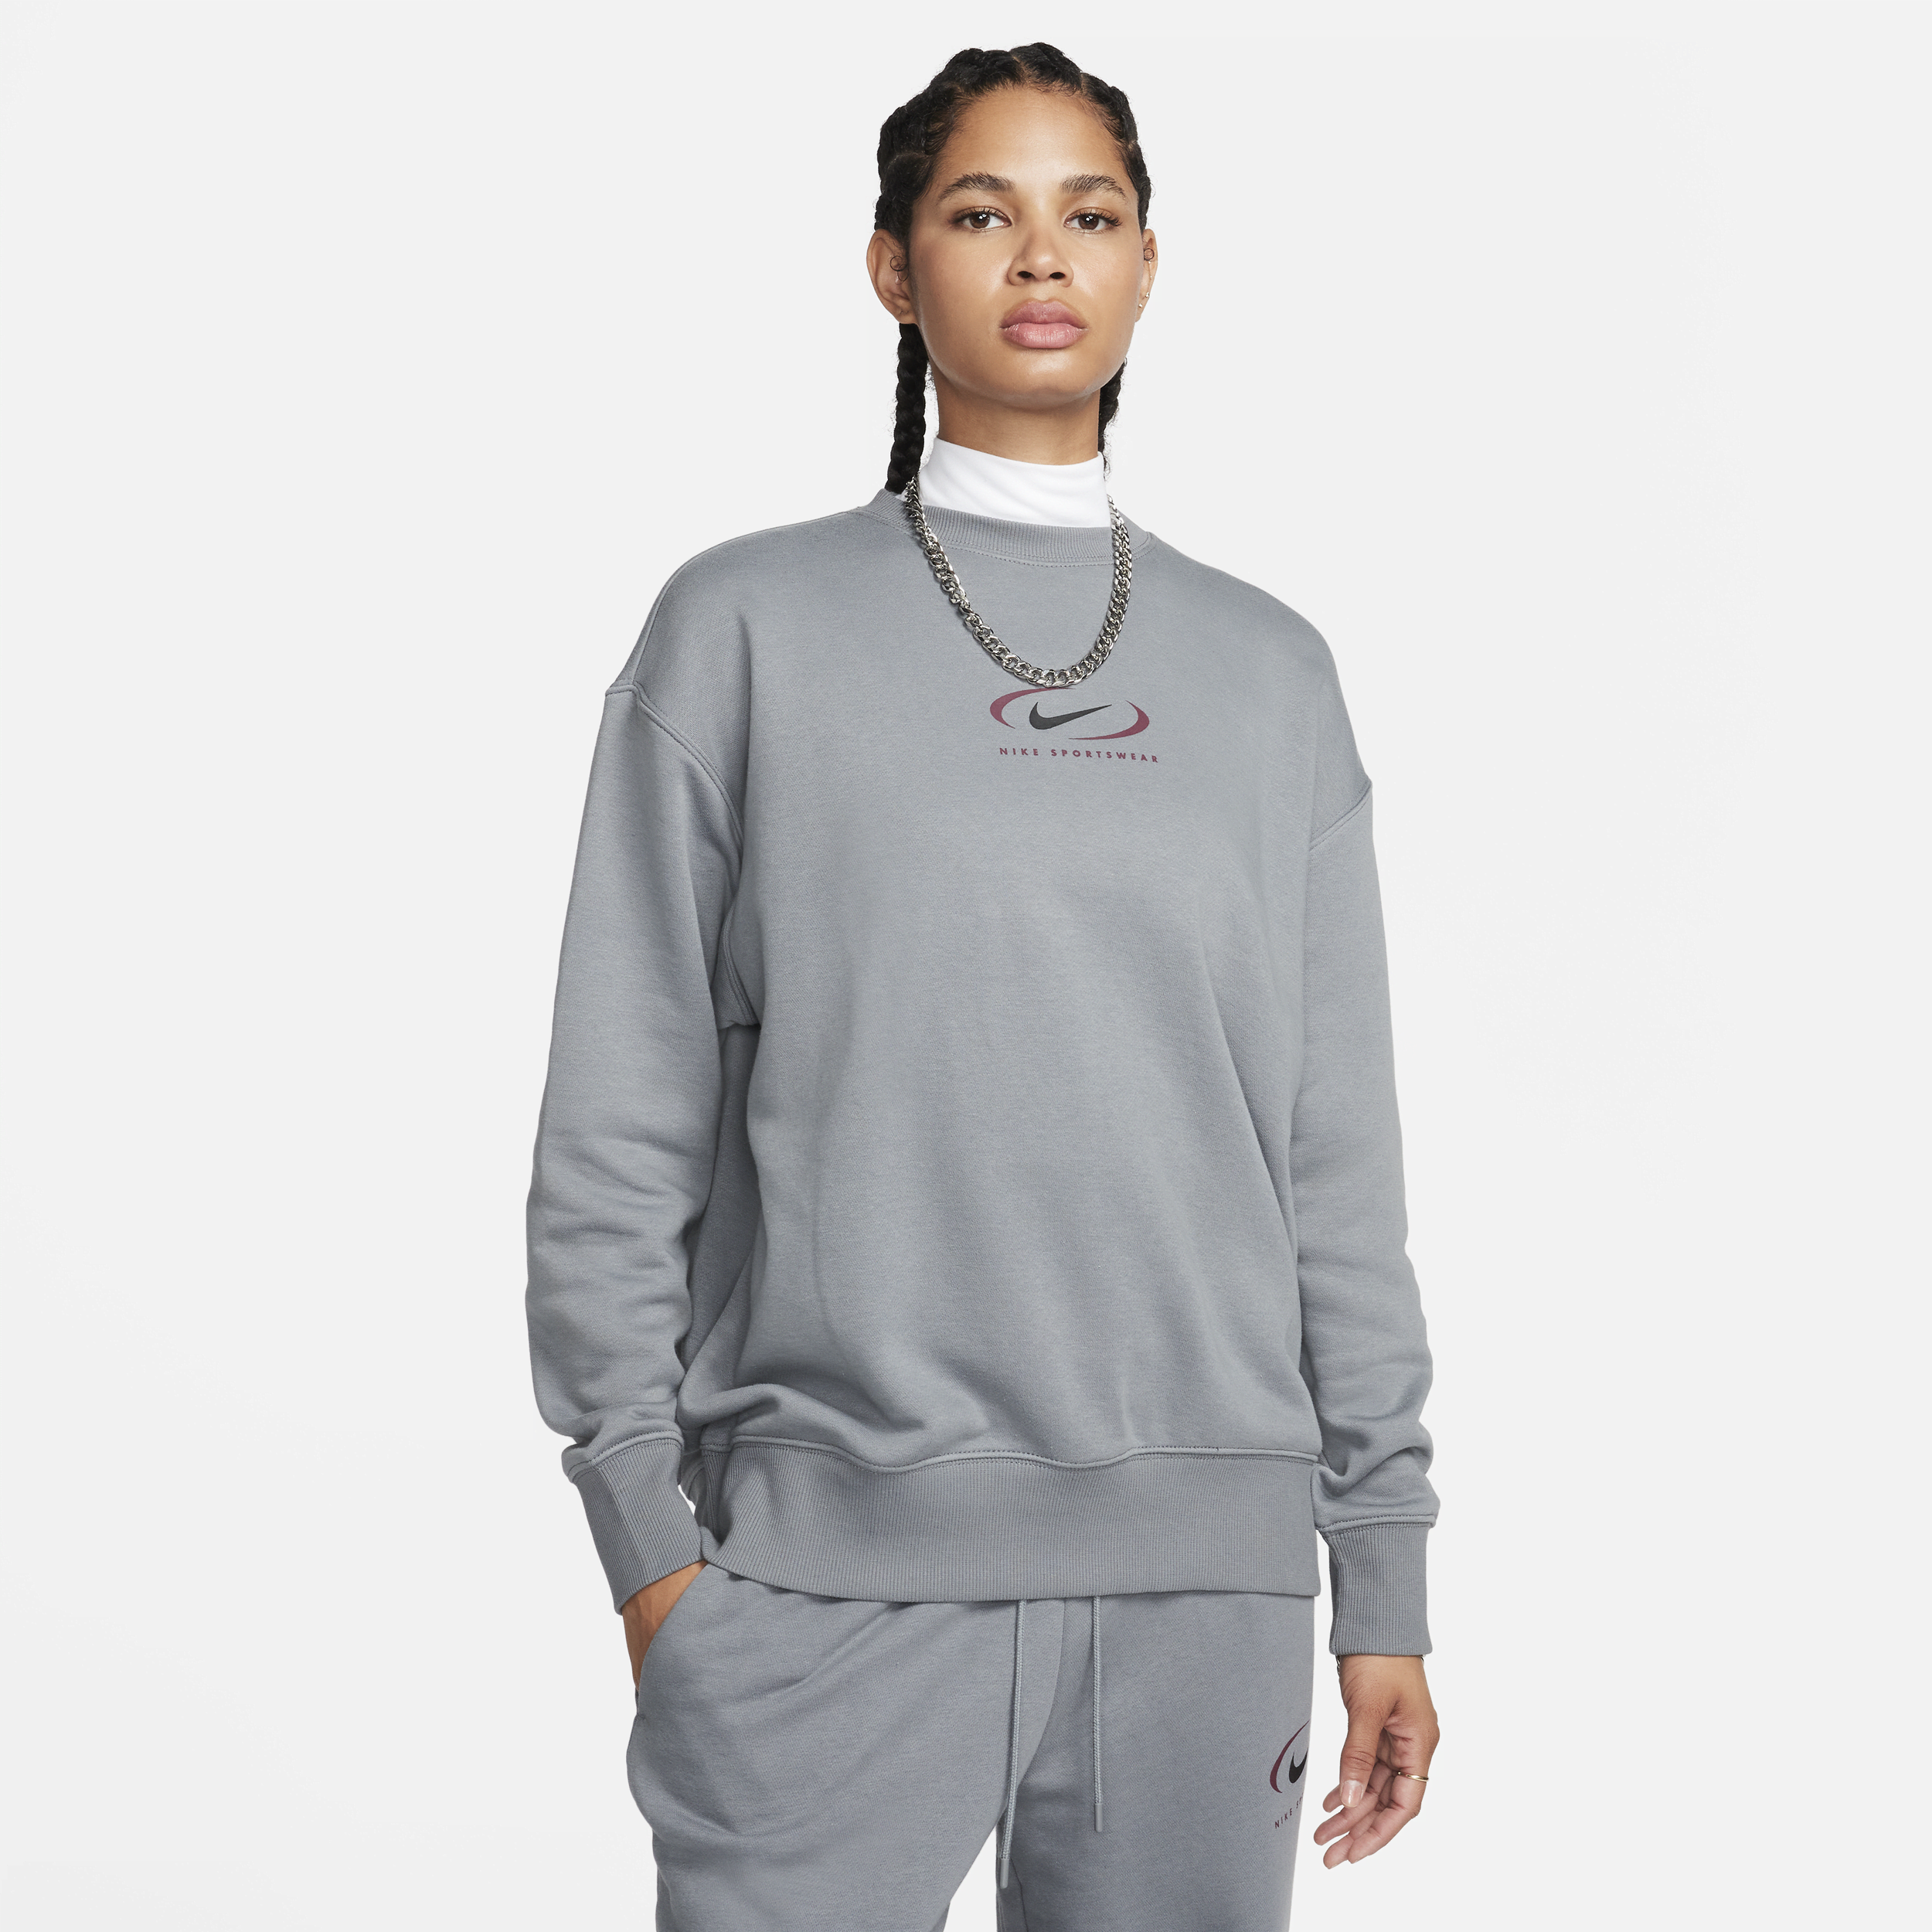 Overdimensioneret Nike Sportswear Phoenix Fleece-sweatshirt med rund hals til kvinder - grå